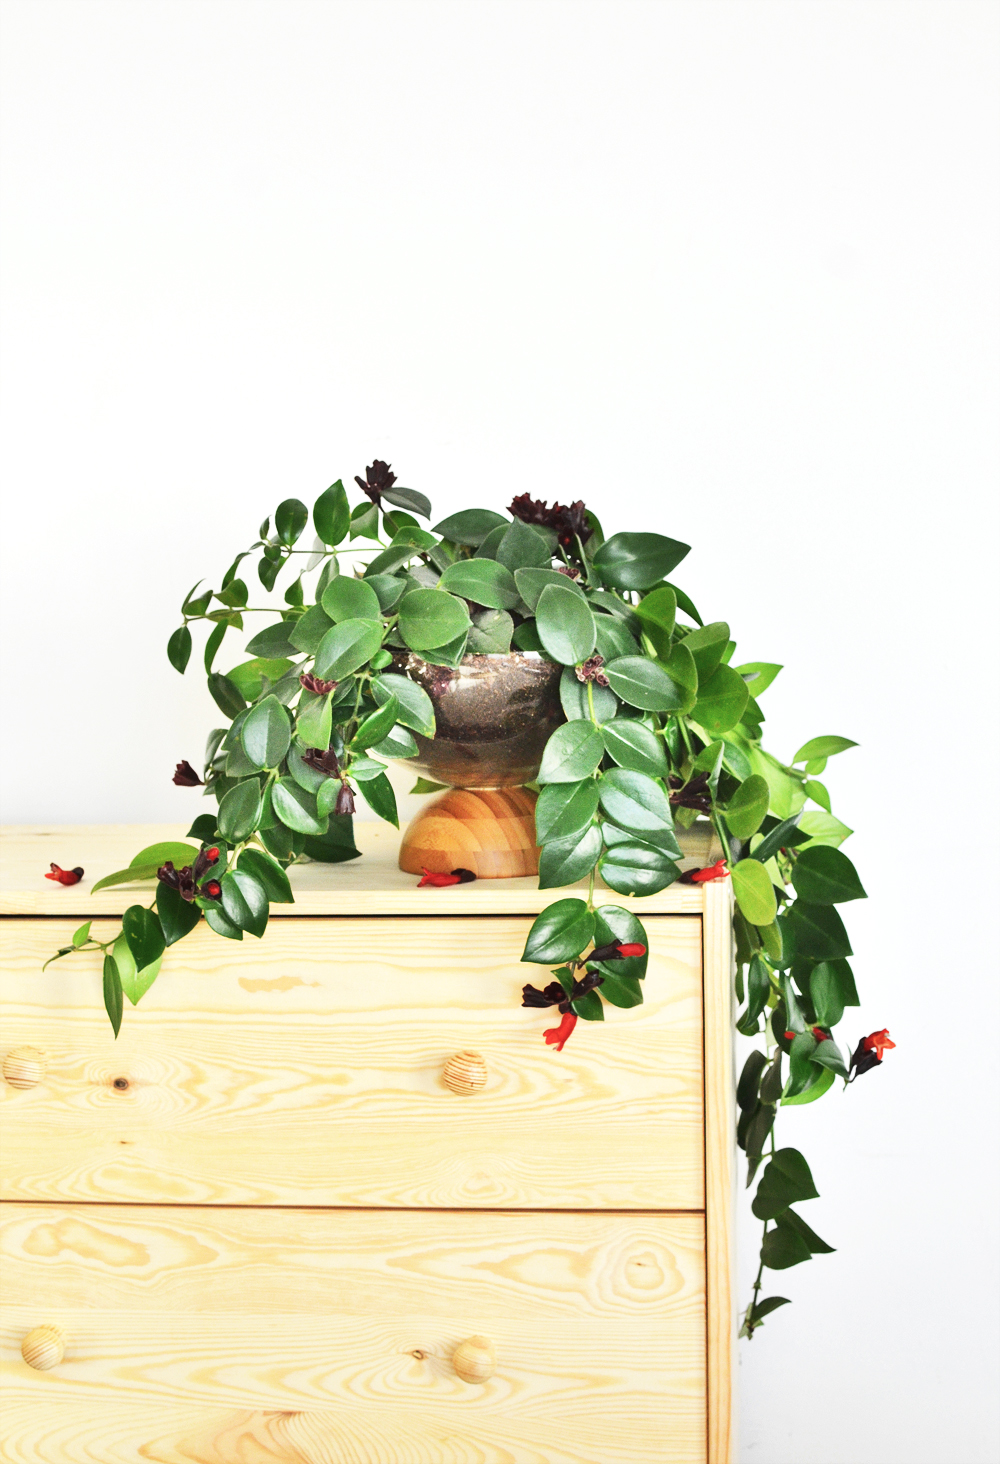 IKEA Hack: DIY bowl planter